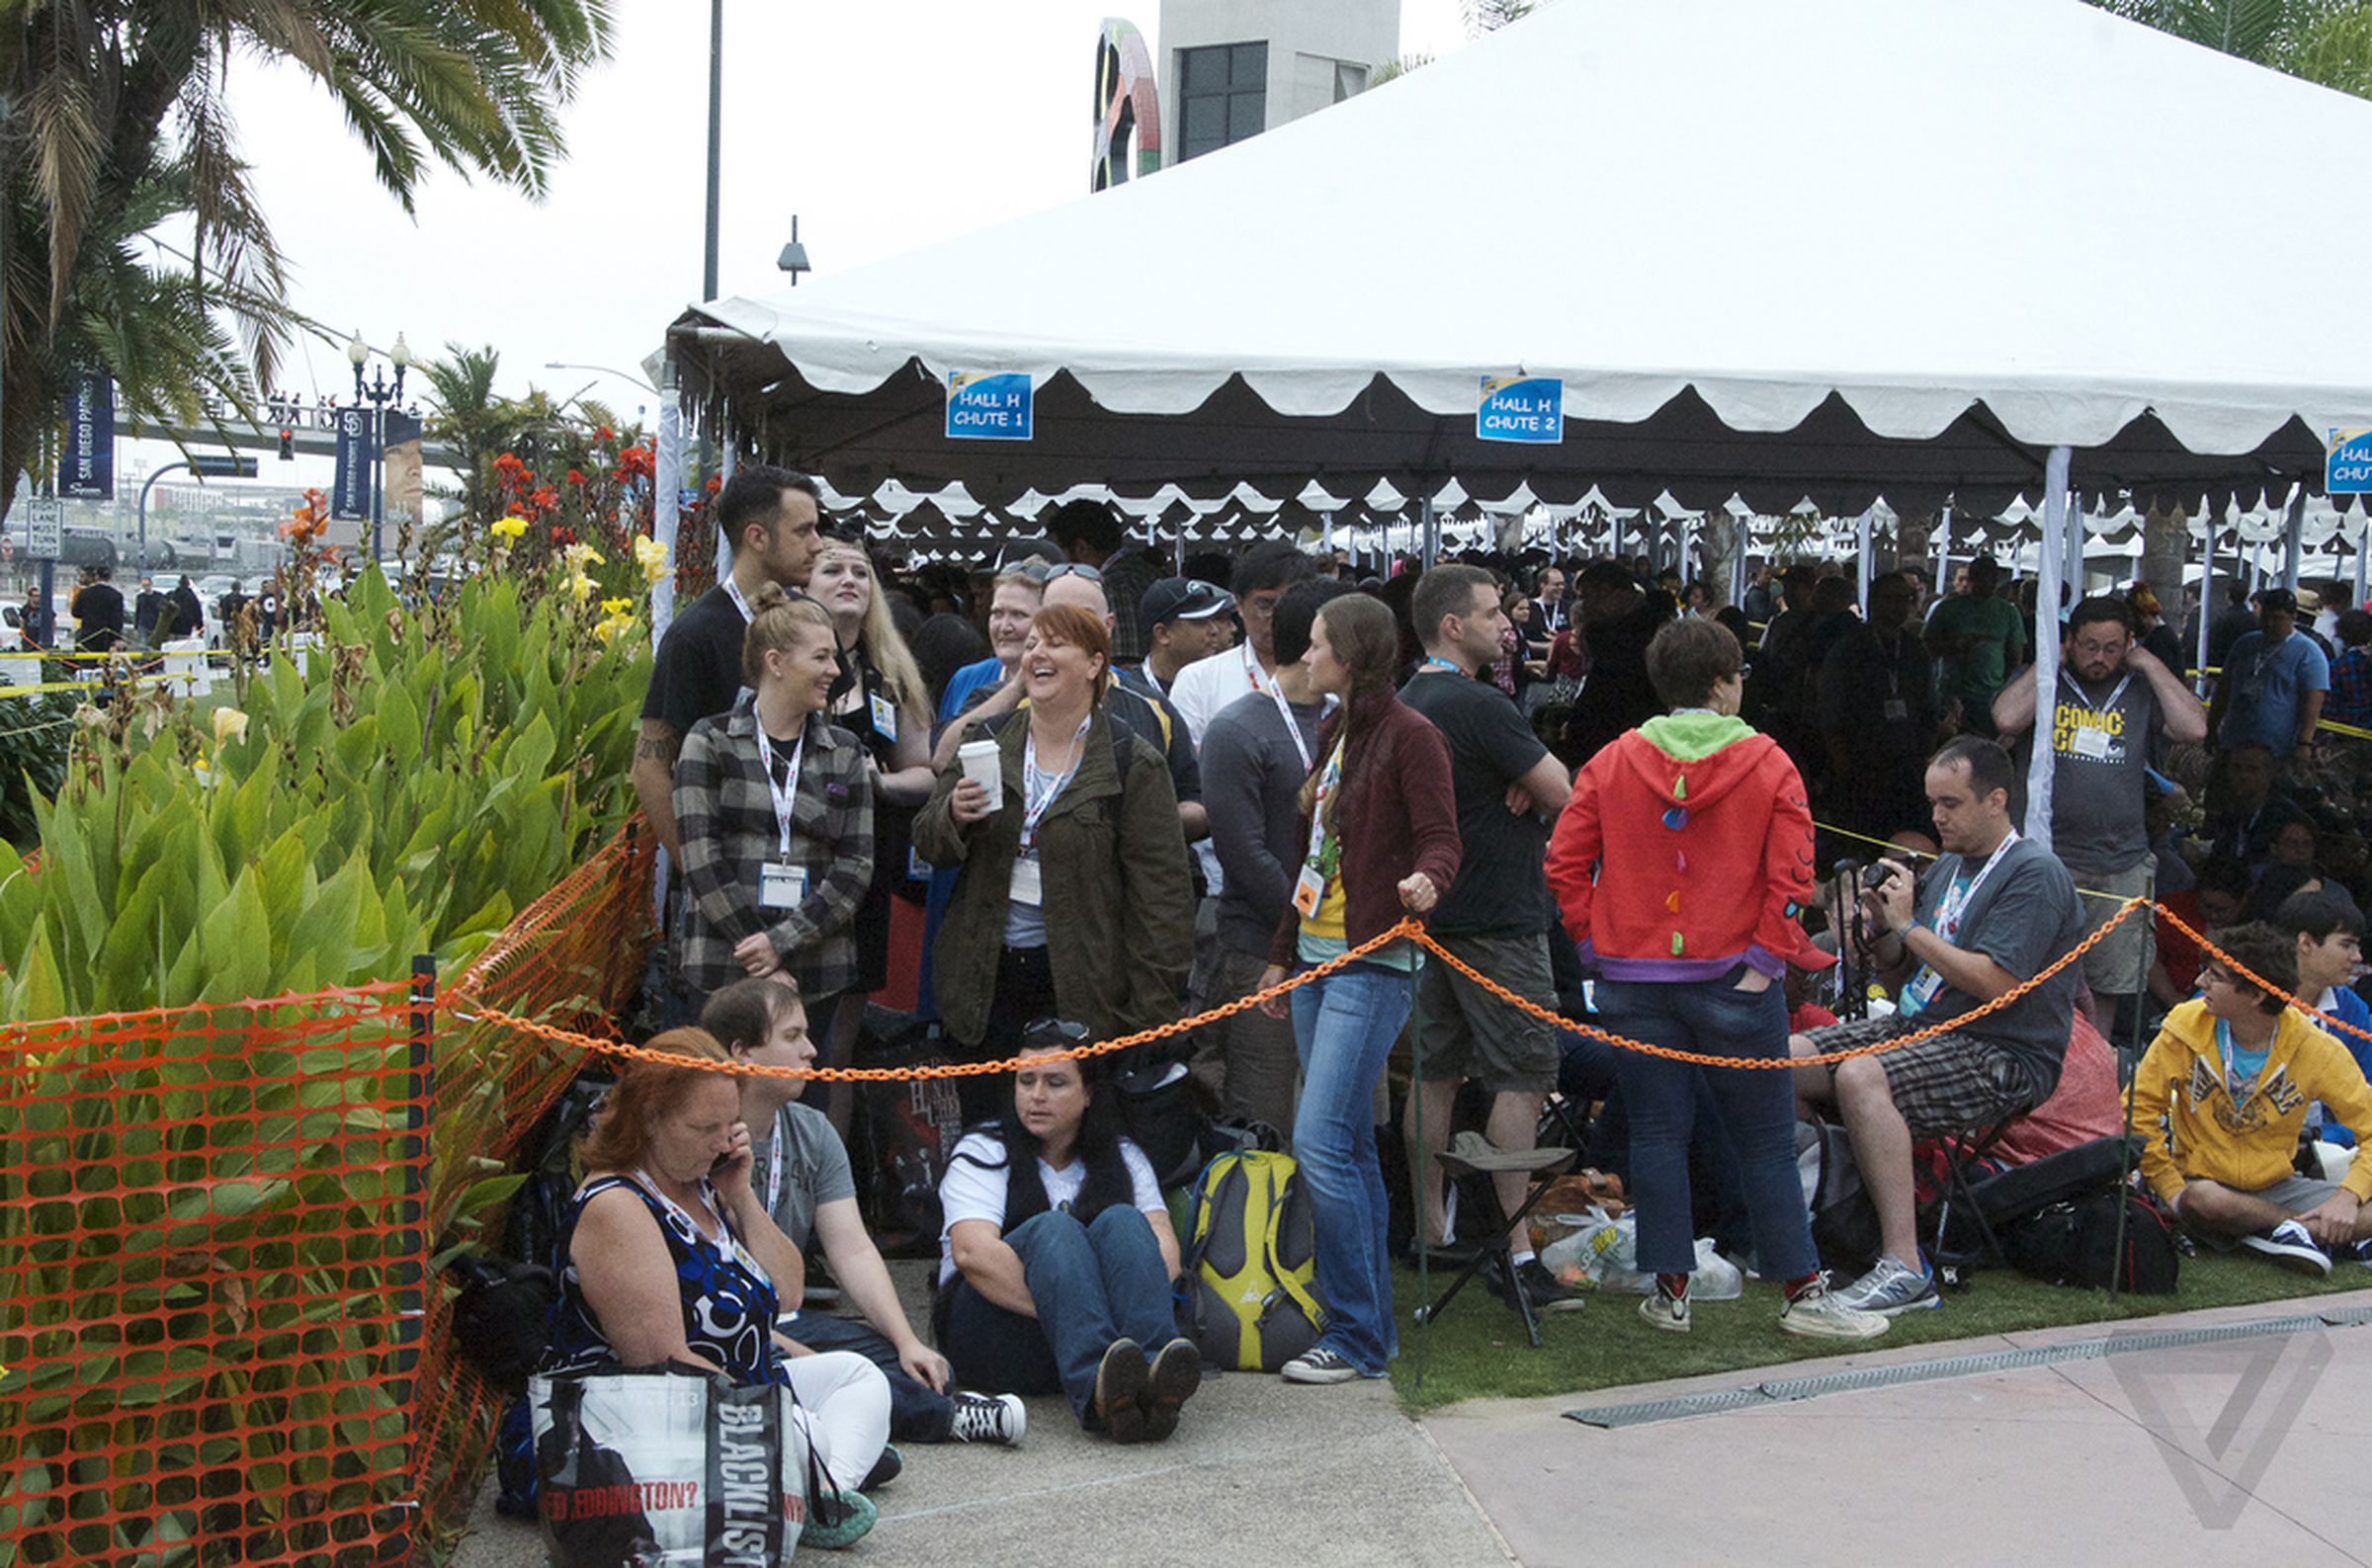 San Diego Comic-Con International 2013 photos